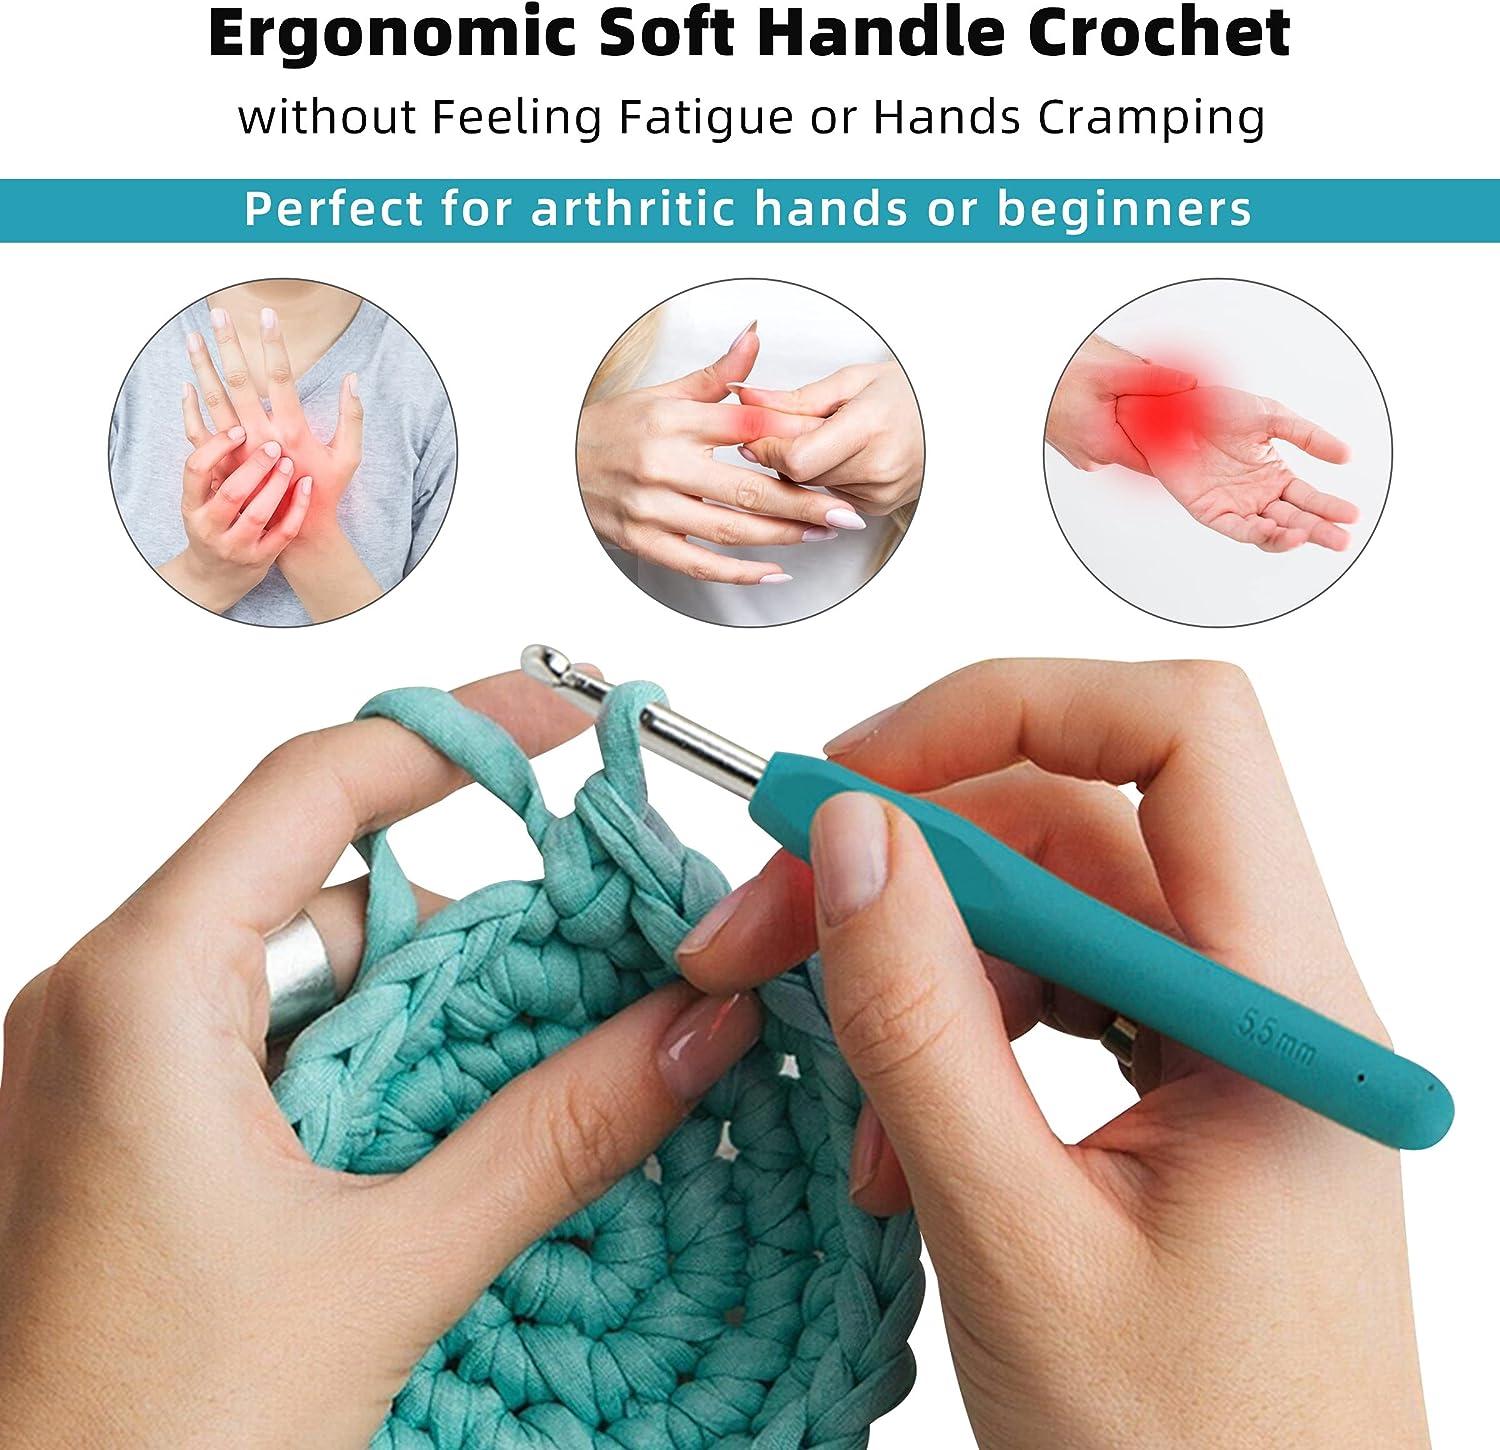 Crochet Hook Set E-More 9 Pcs Full Size Ergonomic Soft Grip